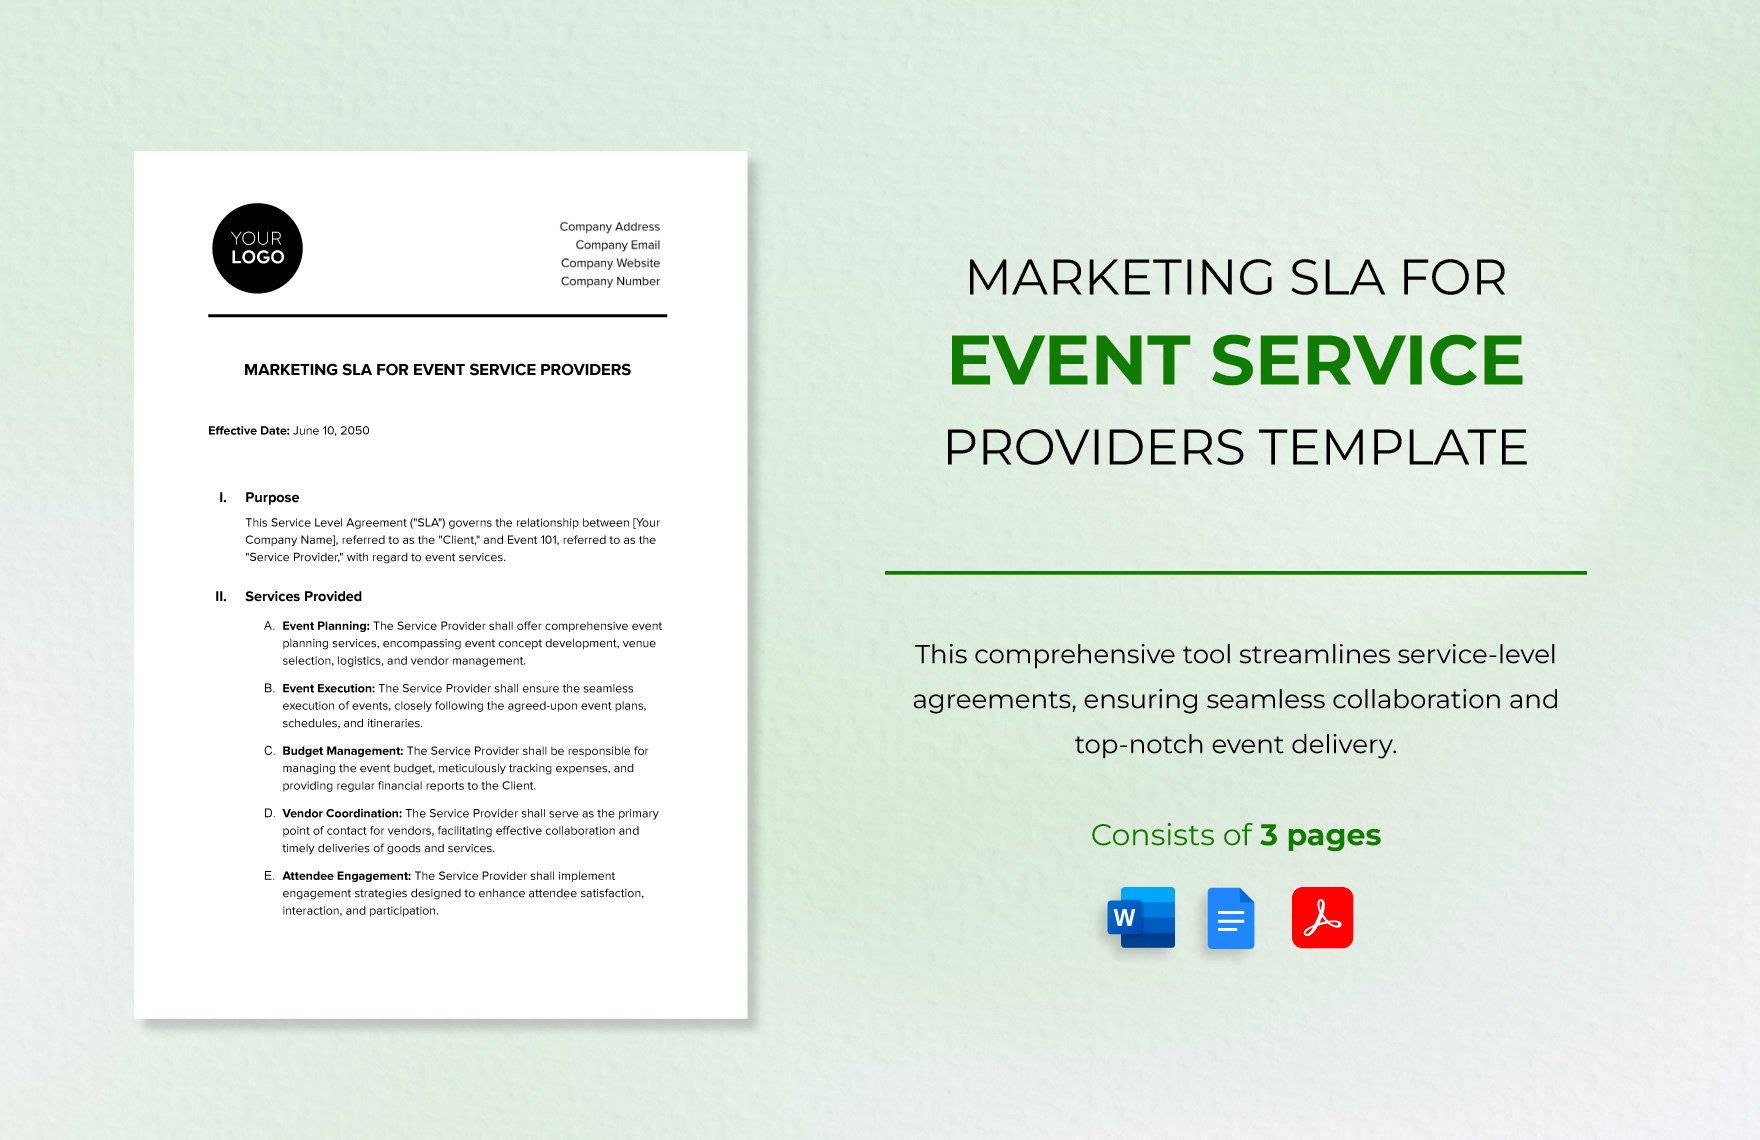 Marketing SLA for Event Service Providers Template